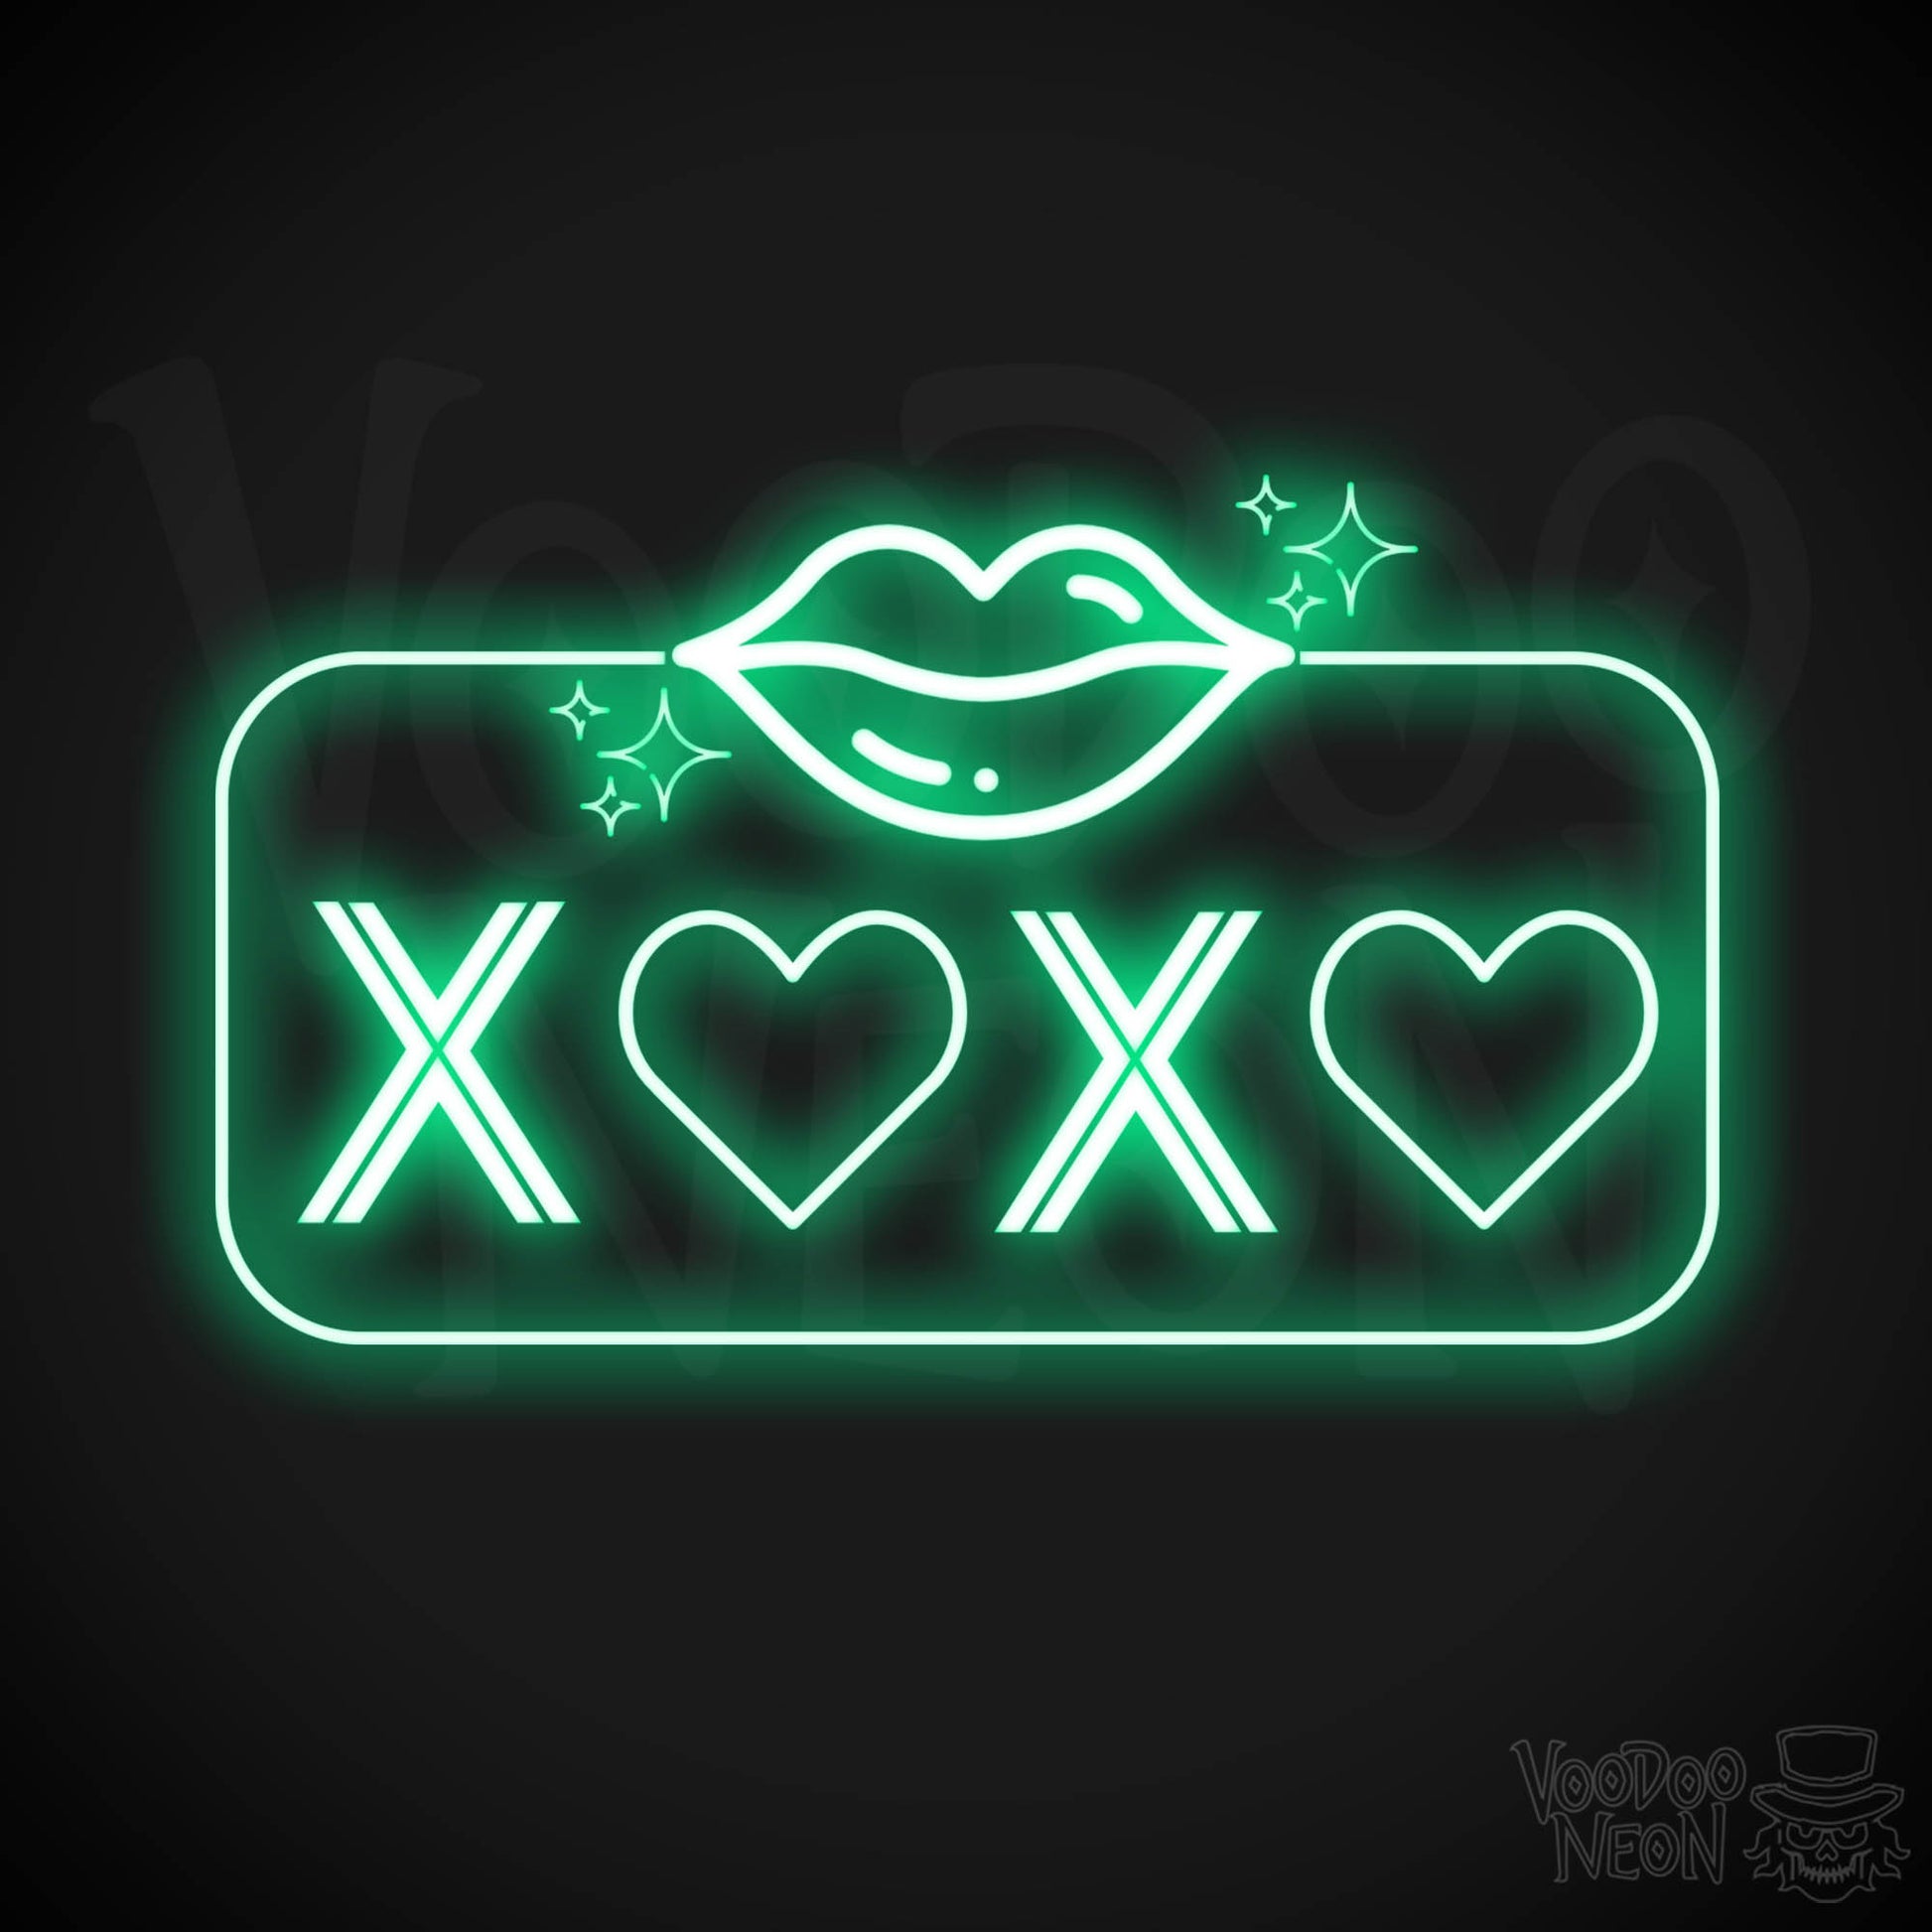 Xoxo Neon Sign - Neon XOXO - Kiss Hug Neon Wall Art - Color Green